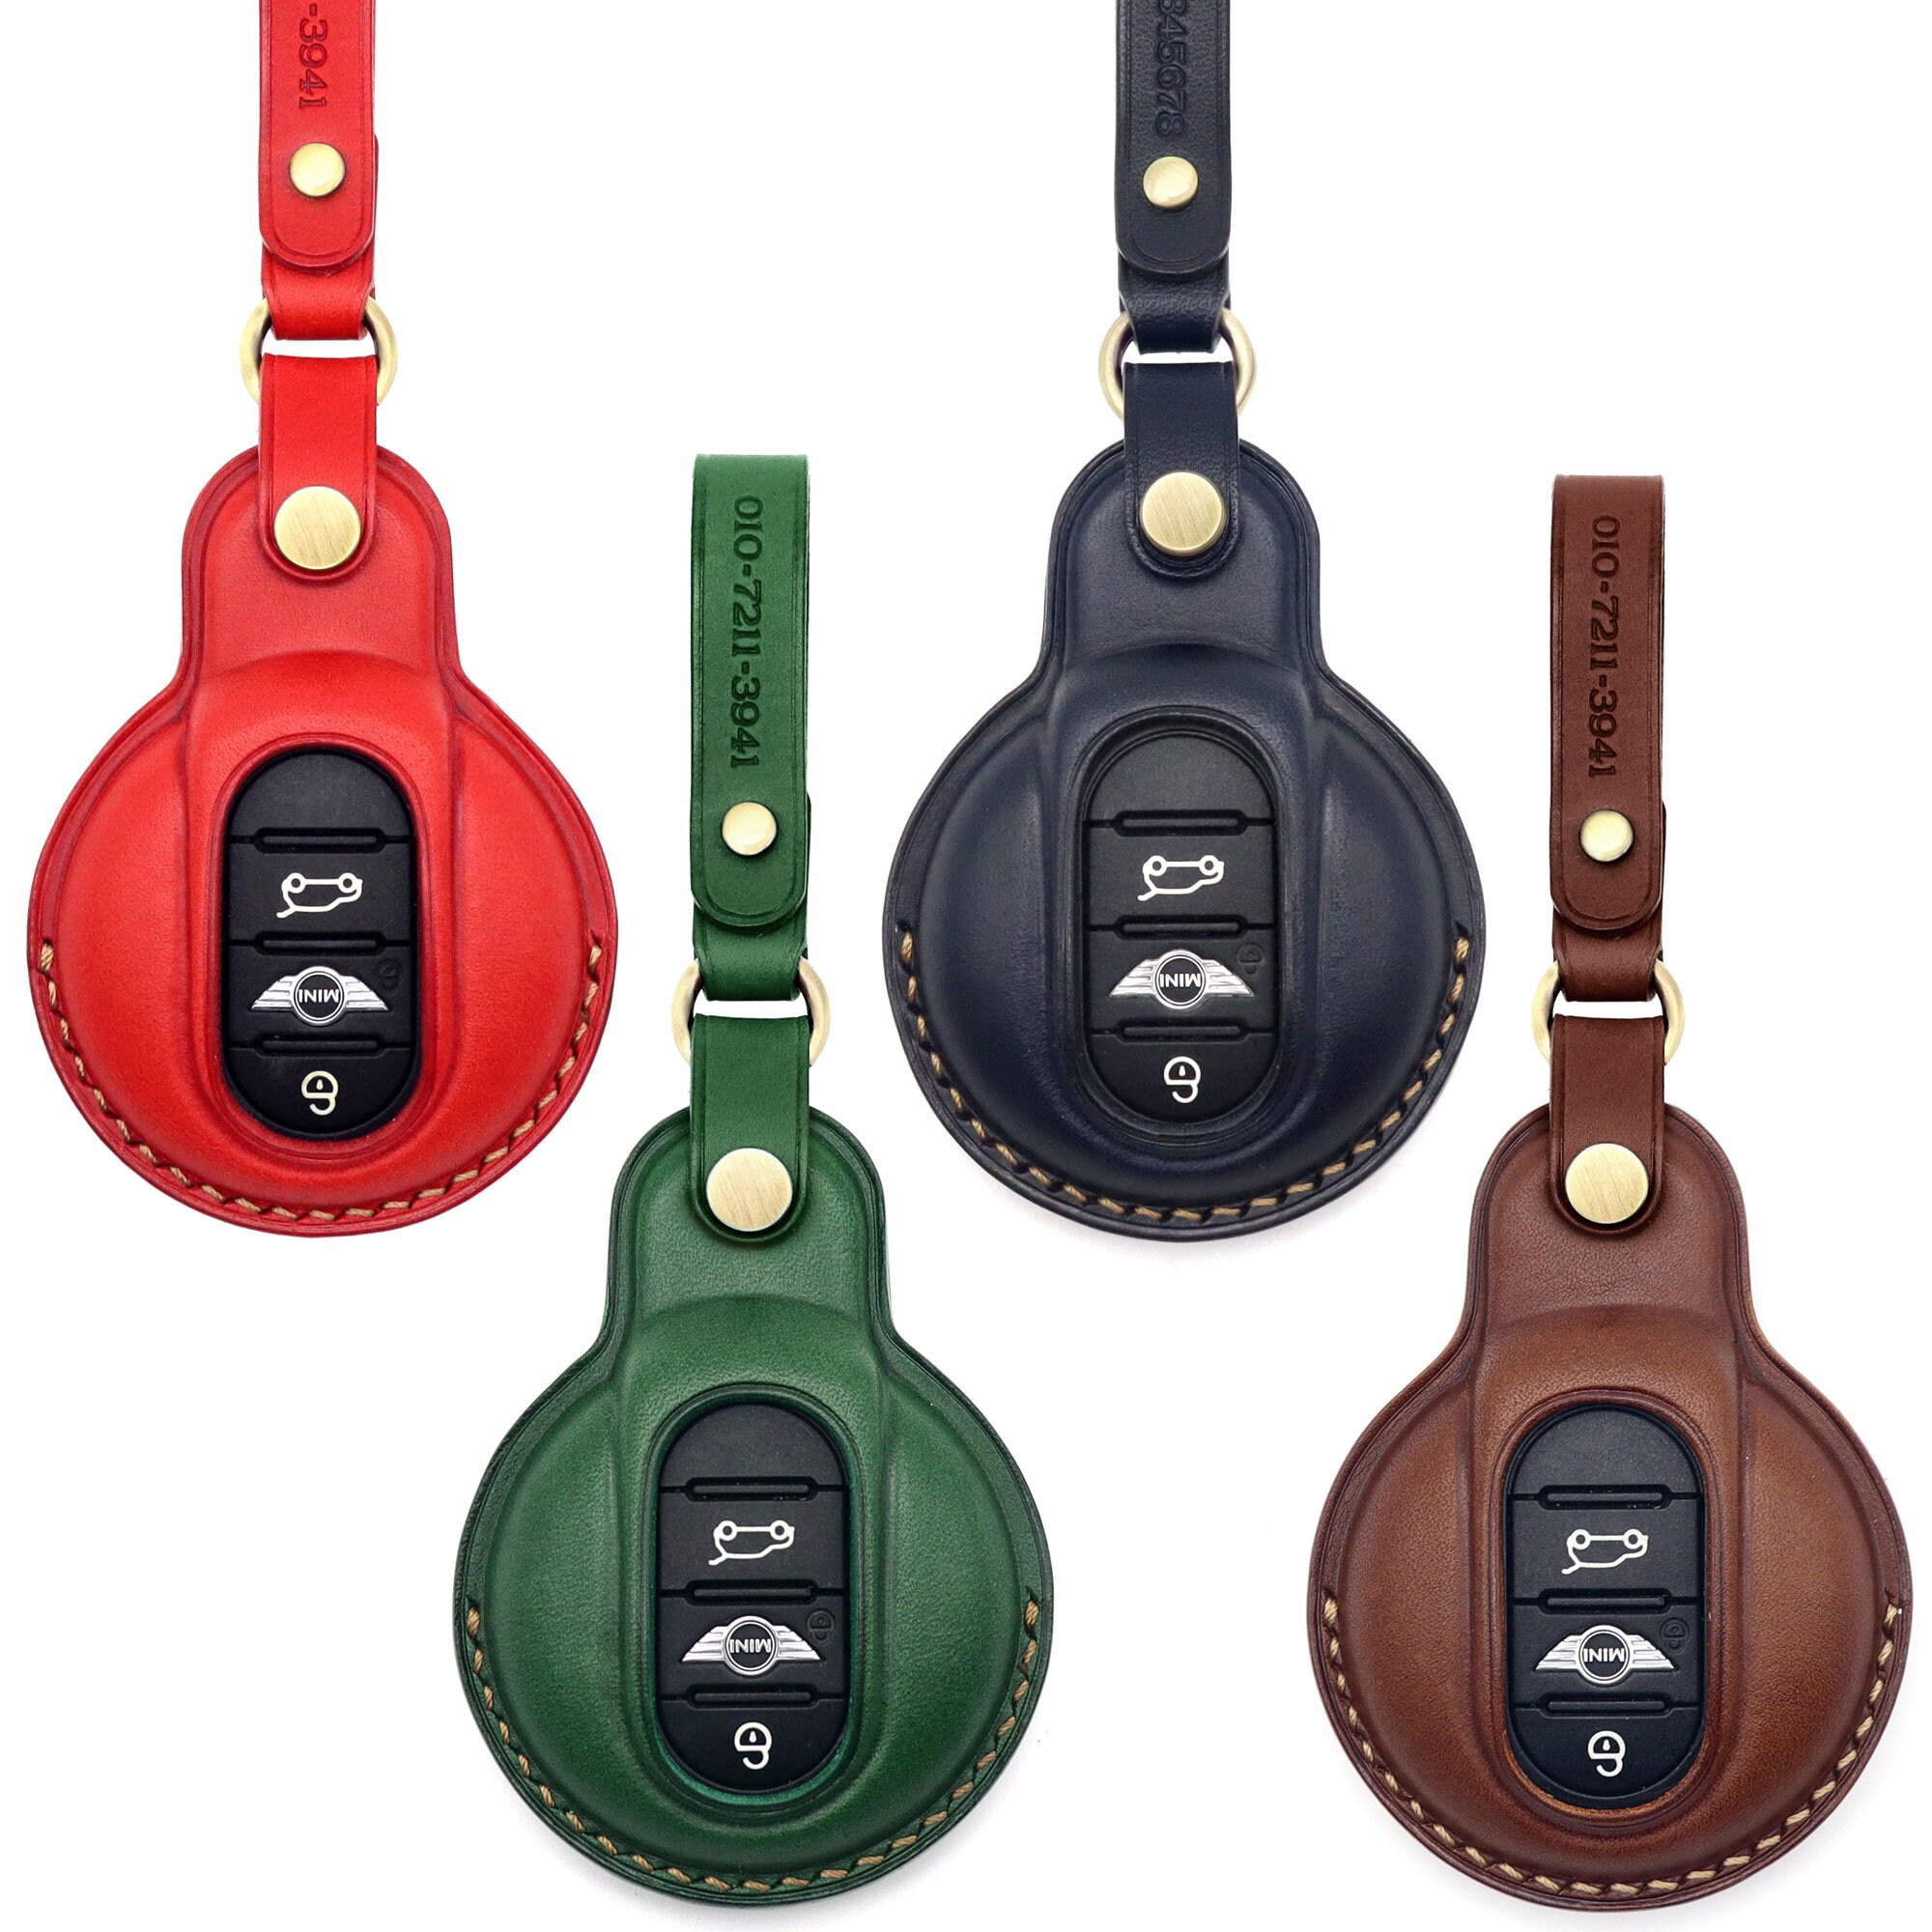 Mini Cooper key chain Leather Car Key Fob cover Remote Key | Etsy